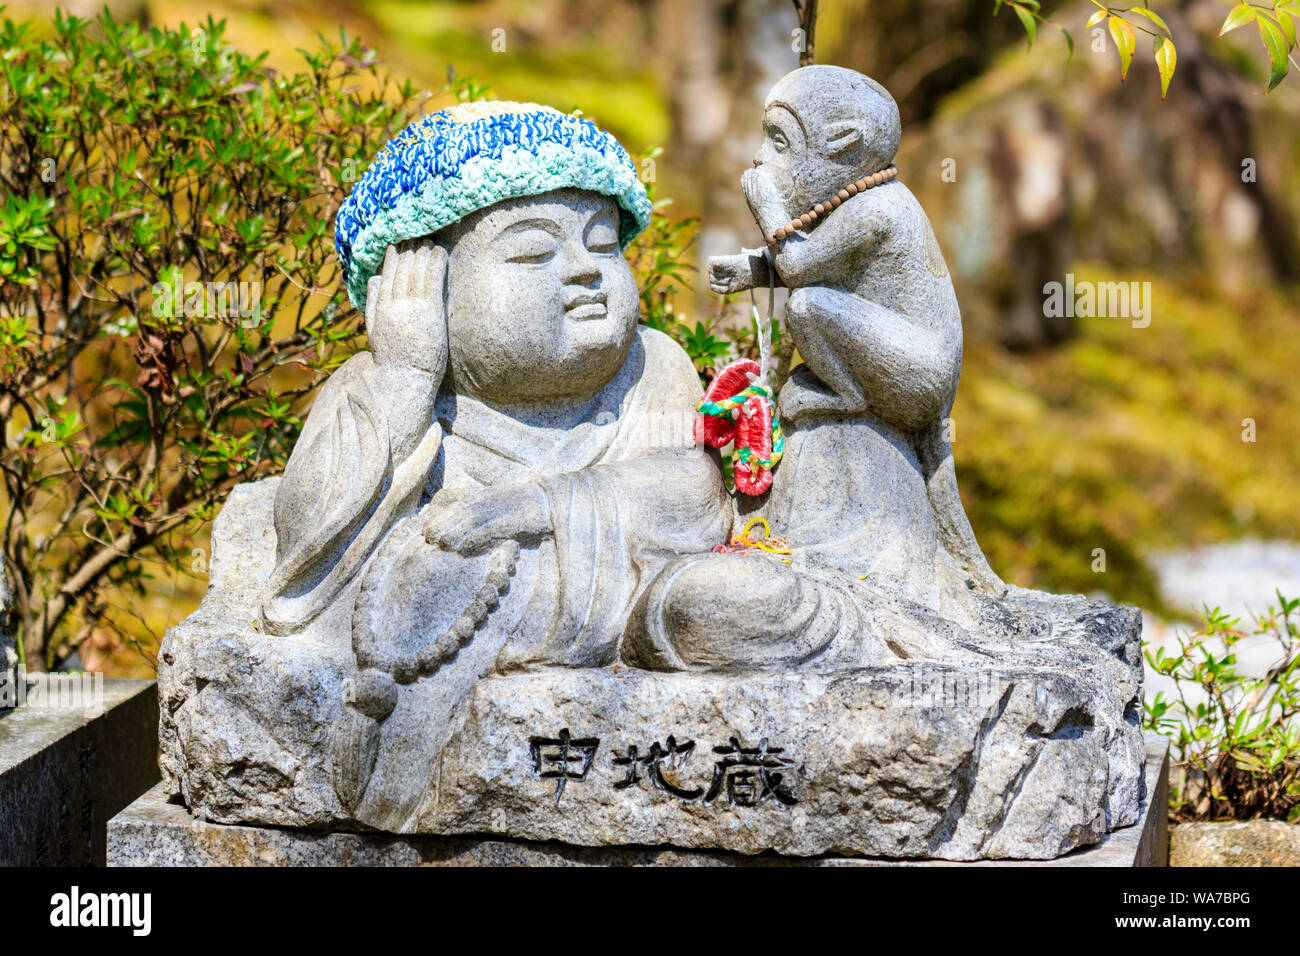 Japan, Miyajima. Daisho-in temple. Small Jizo statue of a reclining Buddhist monk wearing a knitted wool hat, and a monkey sitting next to him eating. Stock Photo